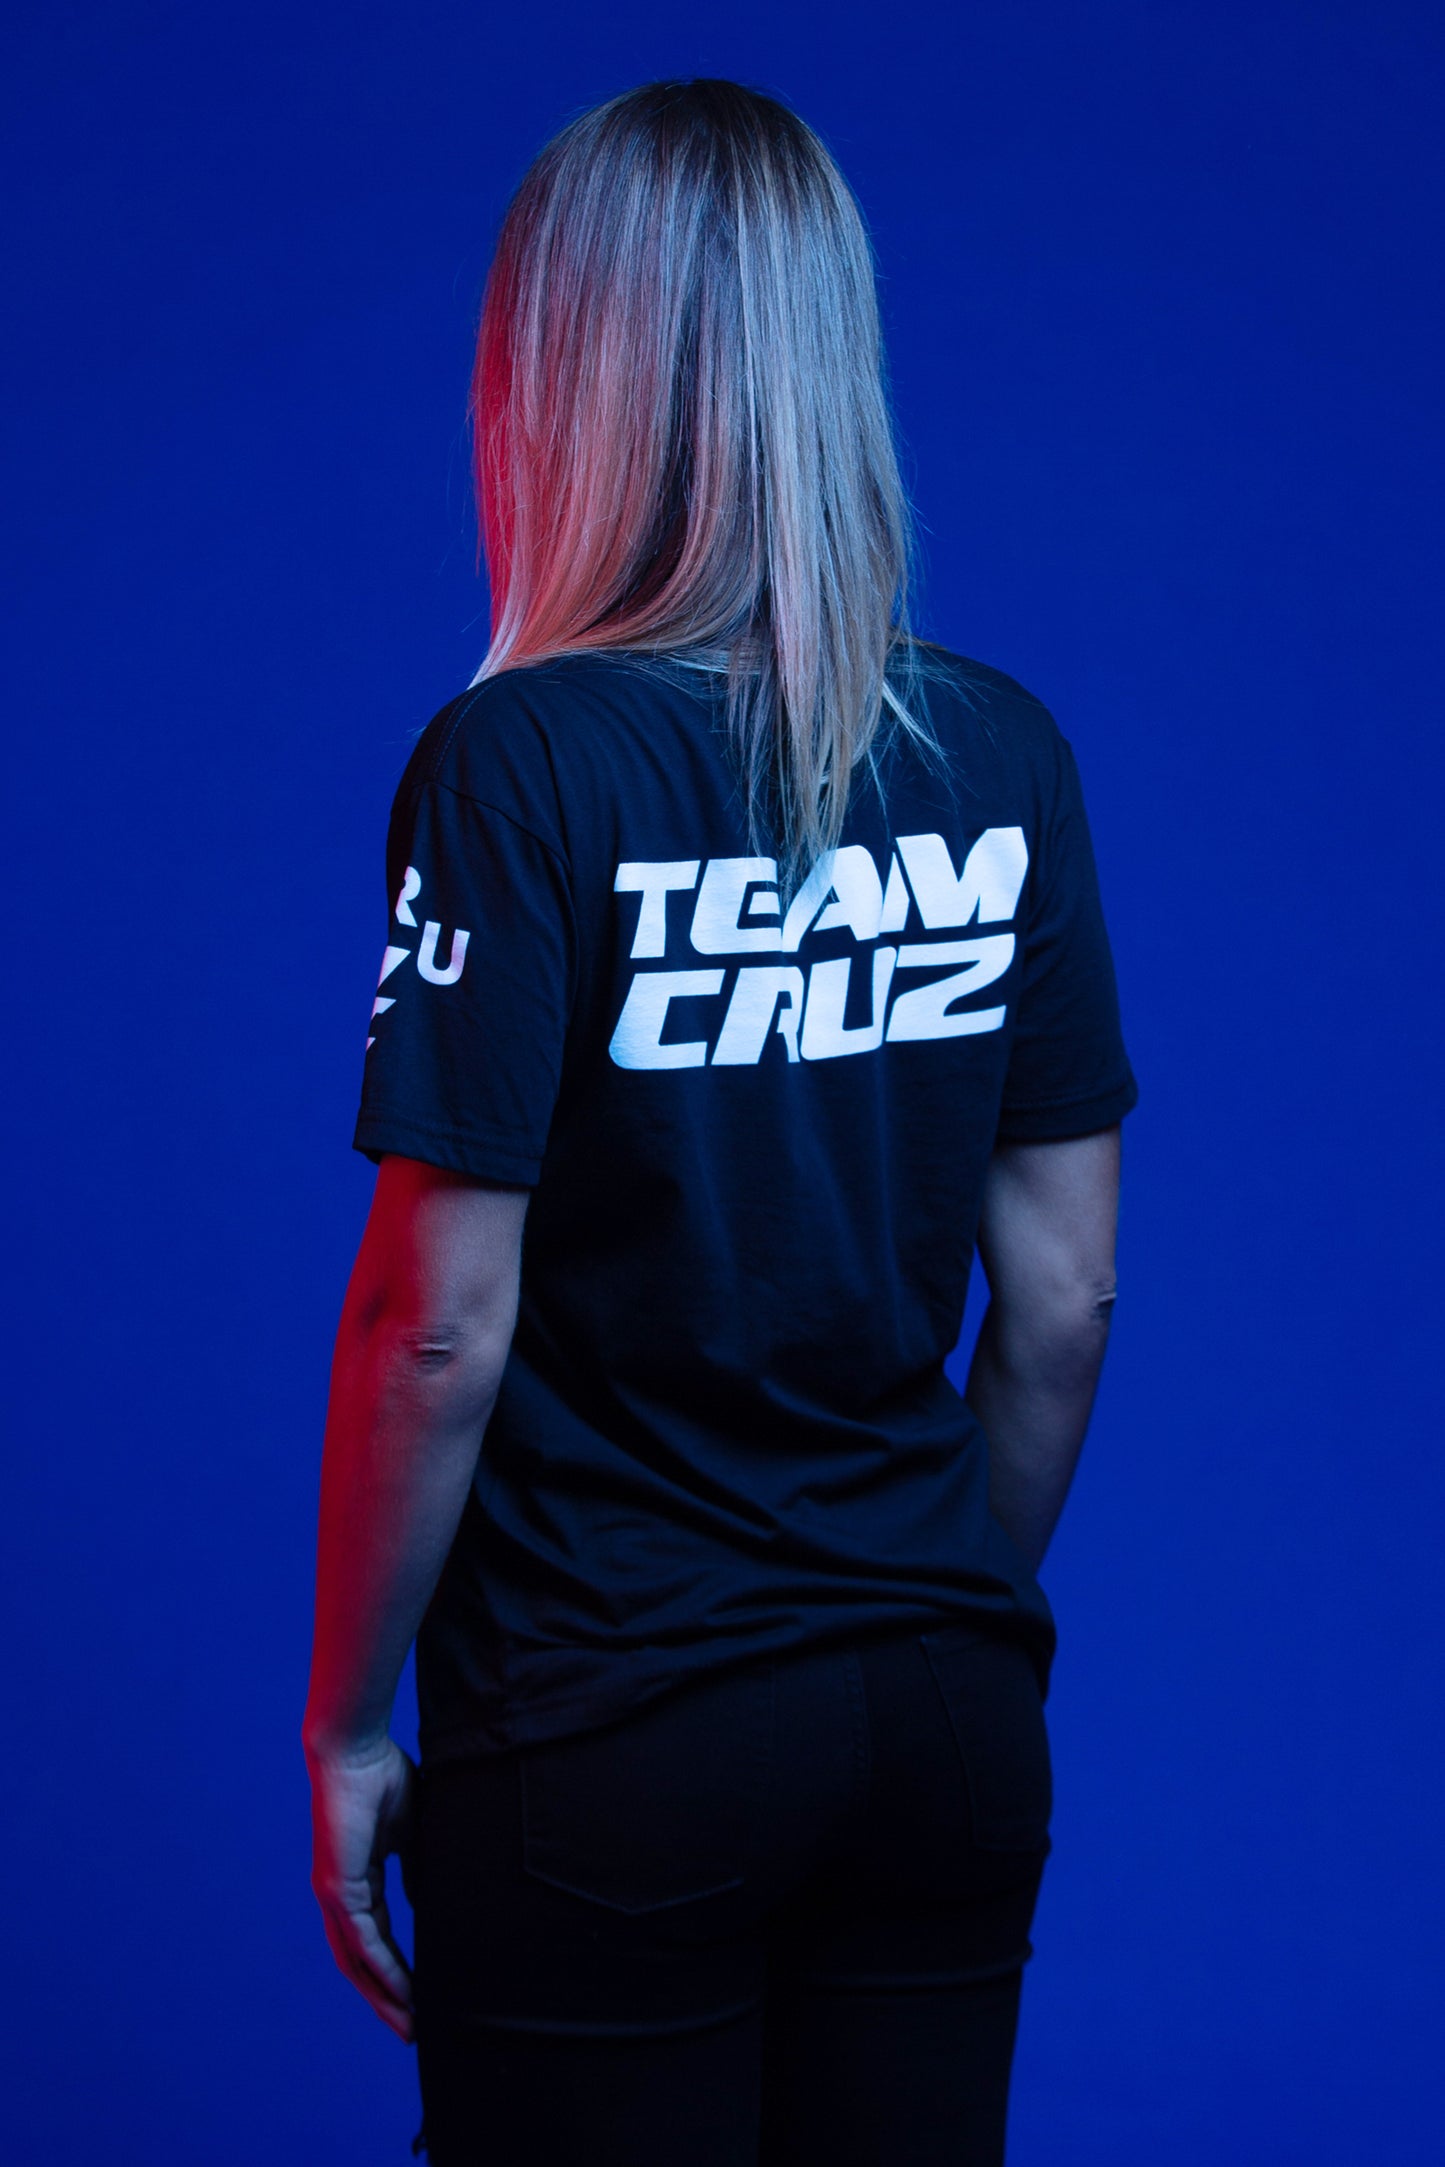 Dominick Cruz “TeamCruz” Adult T Shirt